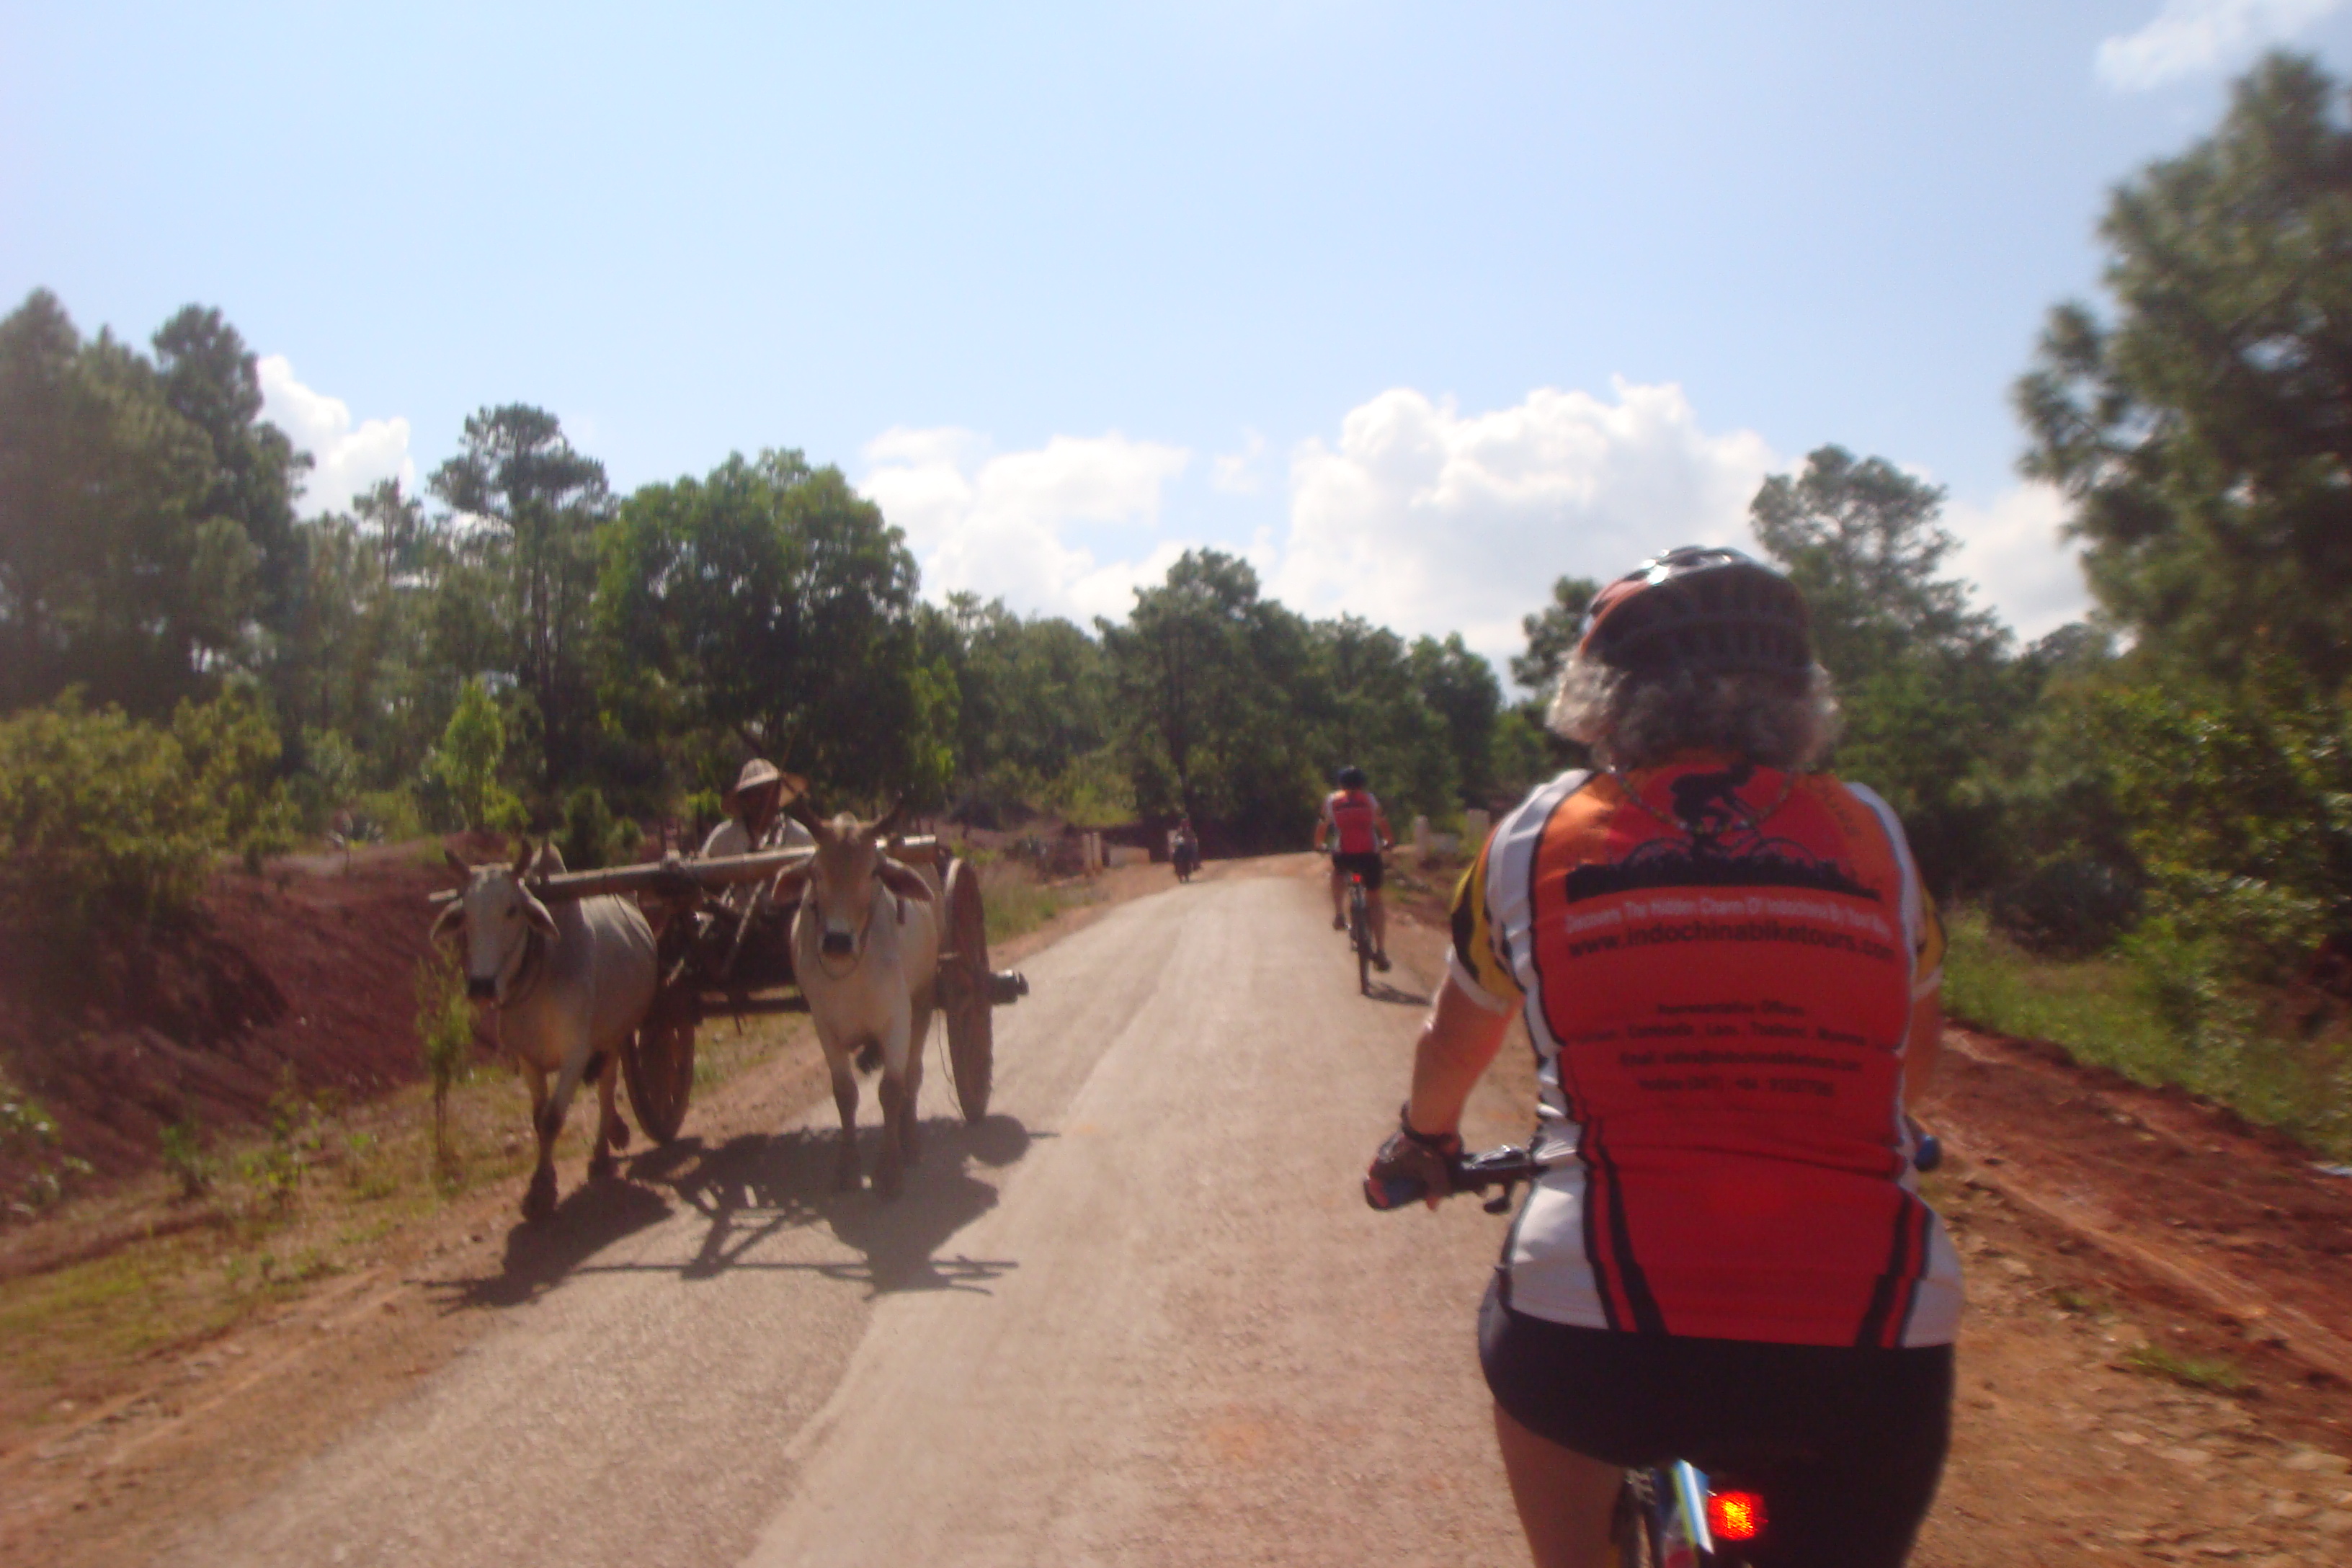 Laos Adventure Biking Tours – 13 days